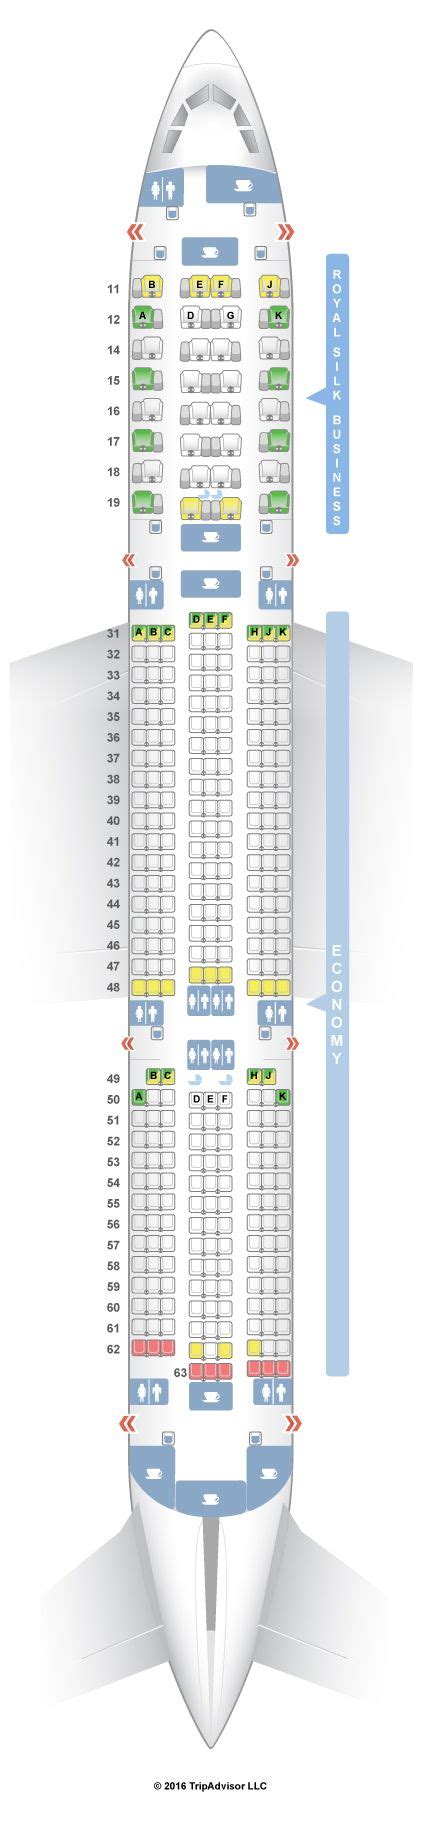 Seatguru Seat Map Thai Airbus A350 900 359 Seatguru Seating Charts